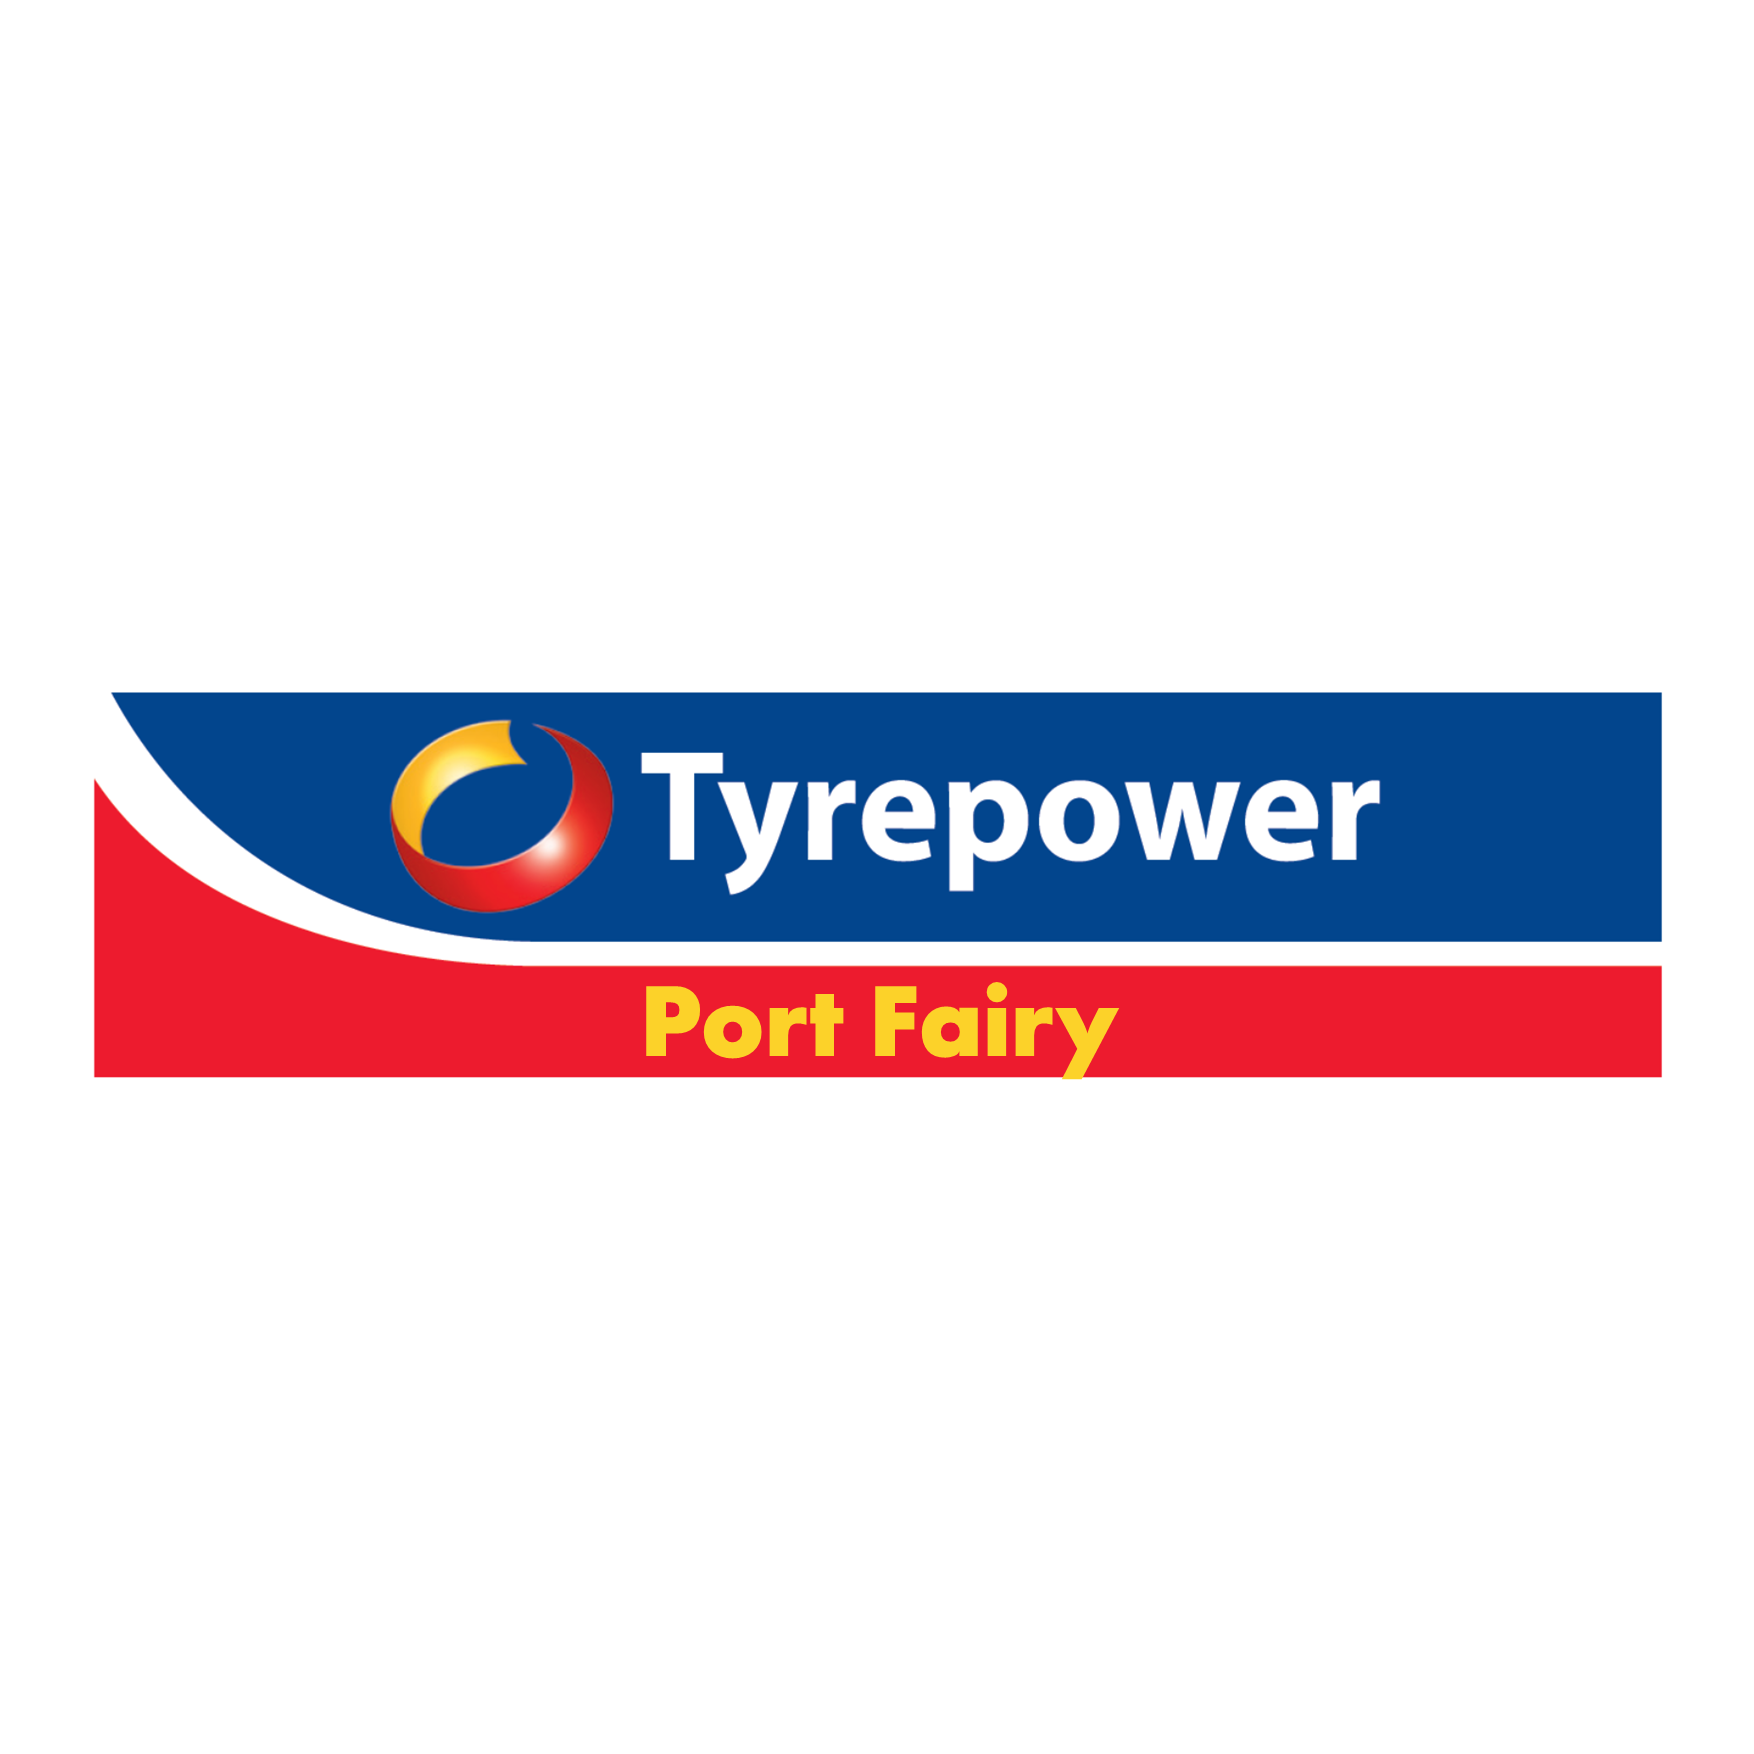 Tyrepower Port Fairy Port Fairy (03) 5568 2218